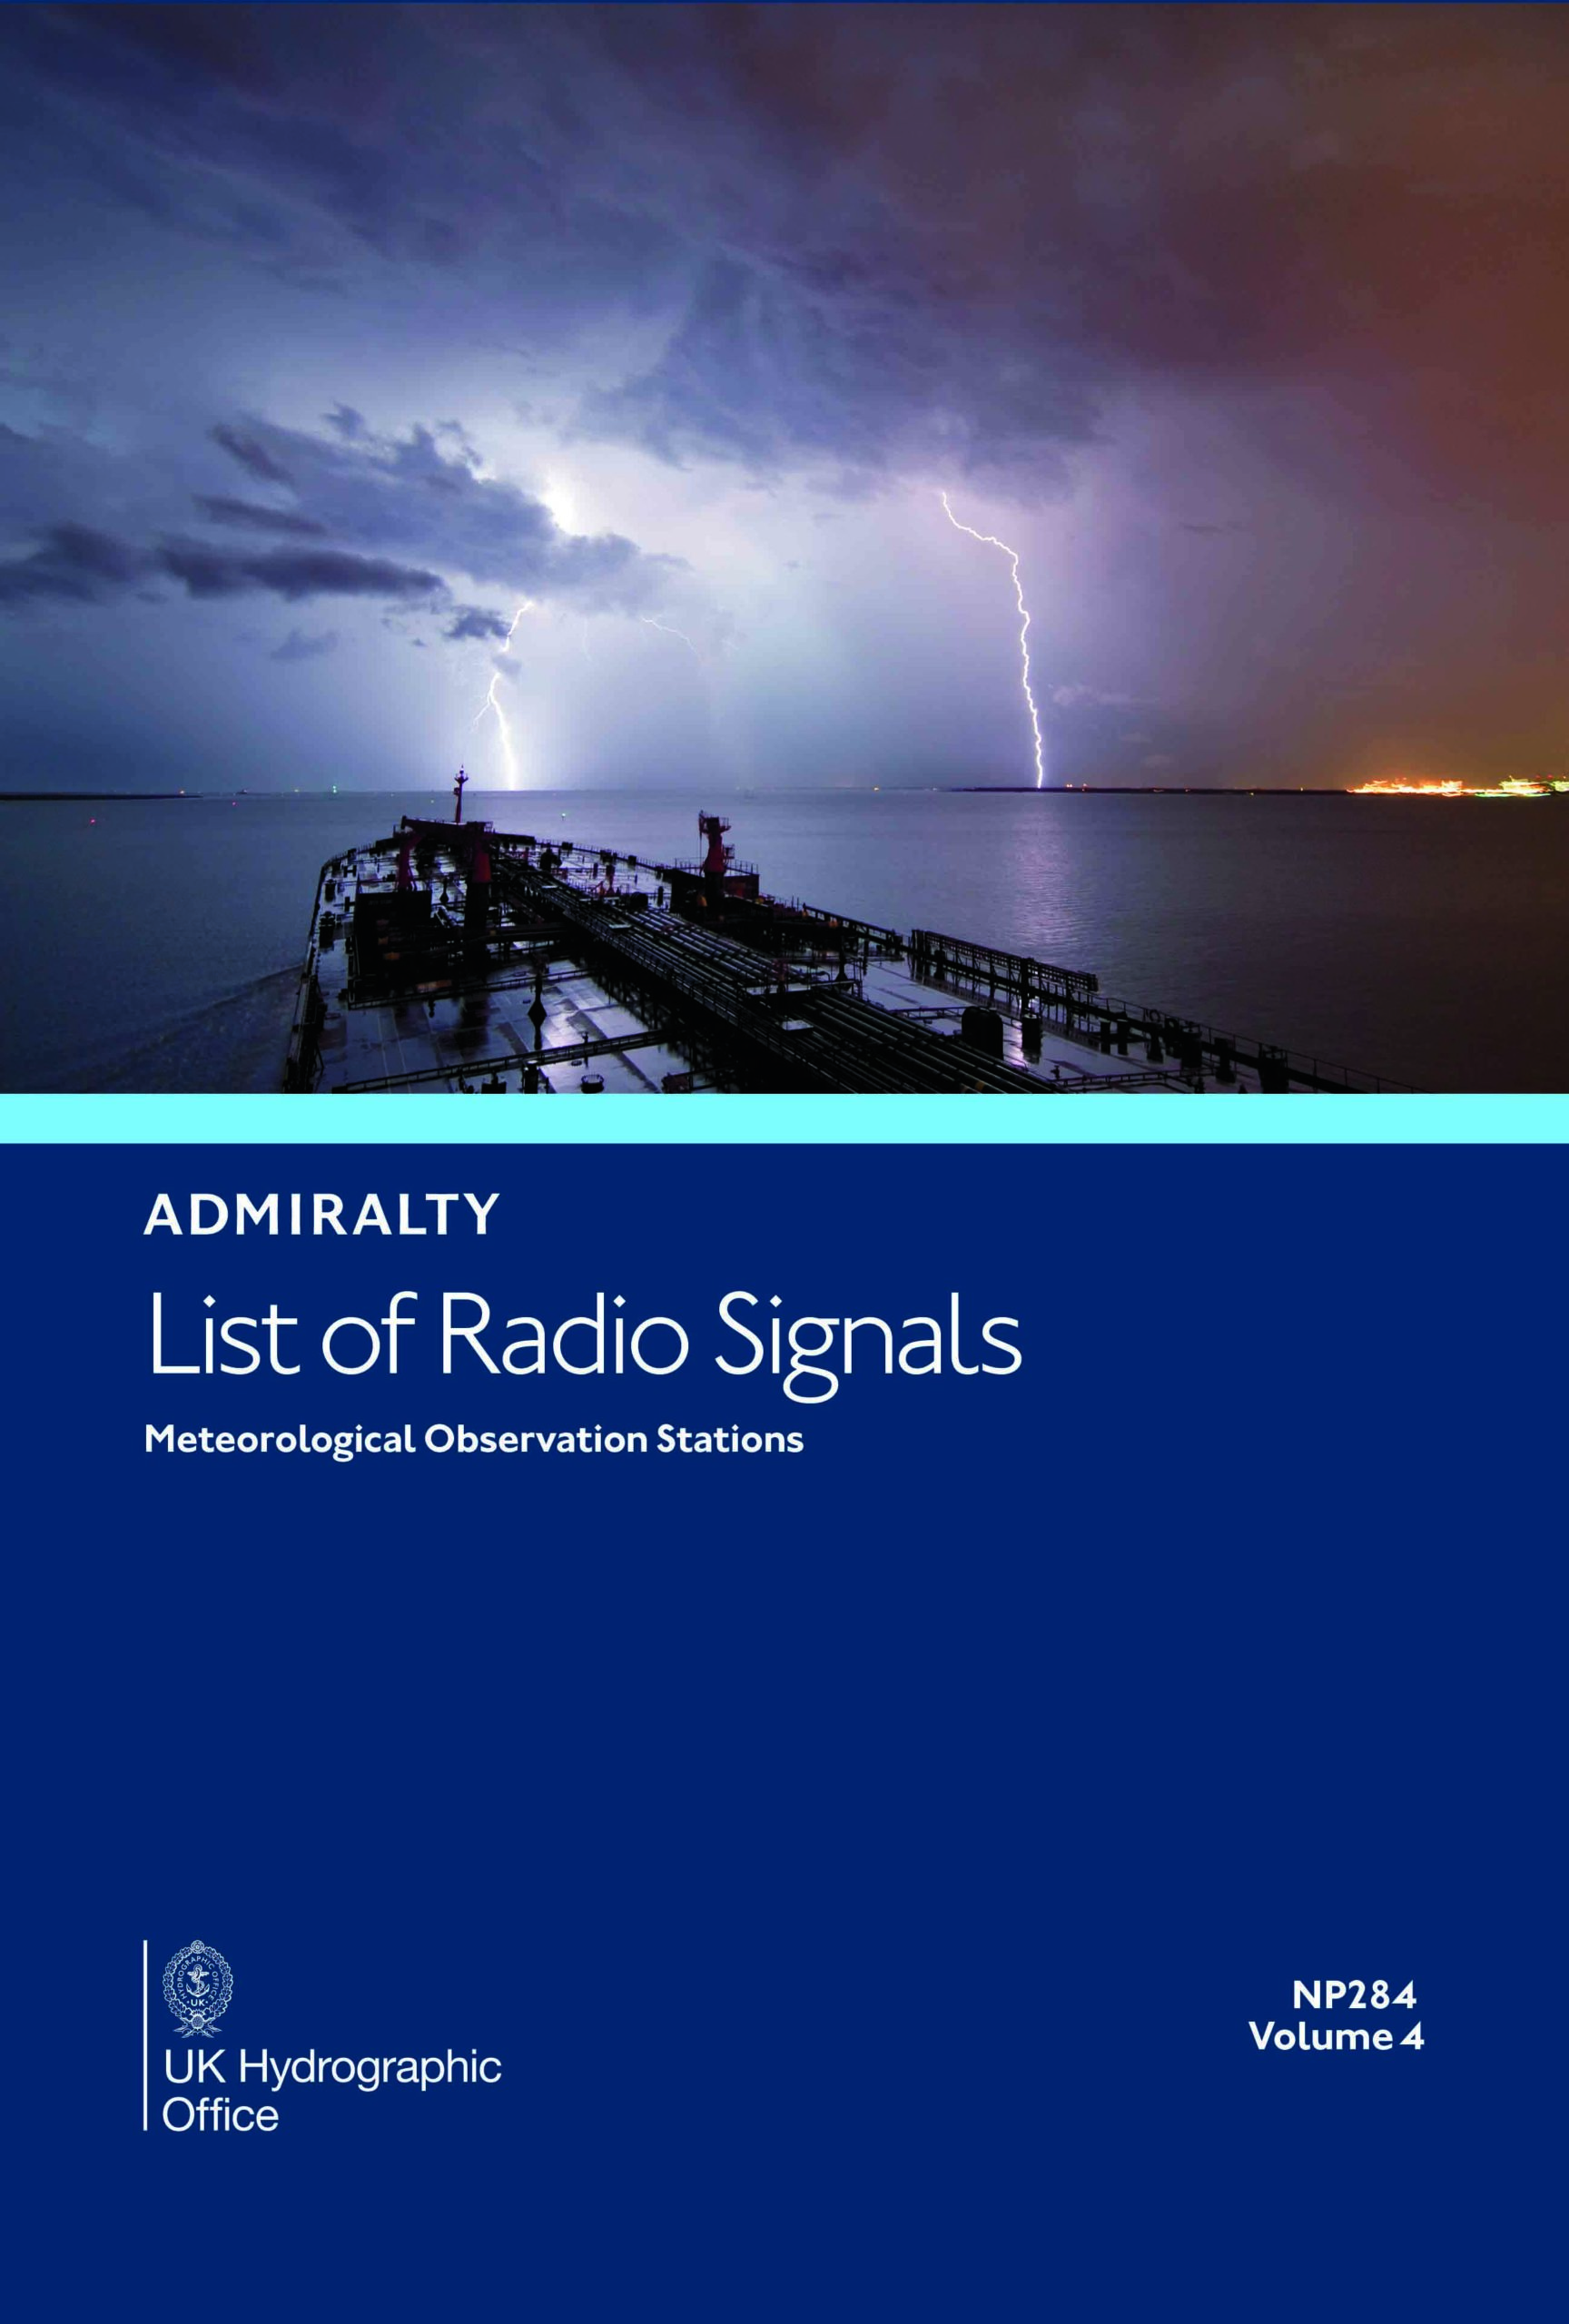 NP284 List of Radio Signals Vol. 4